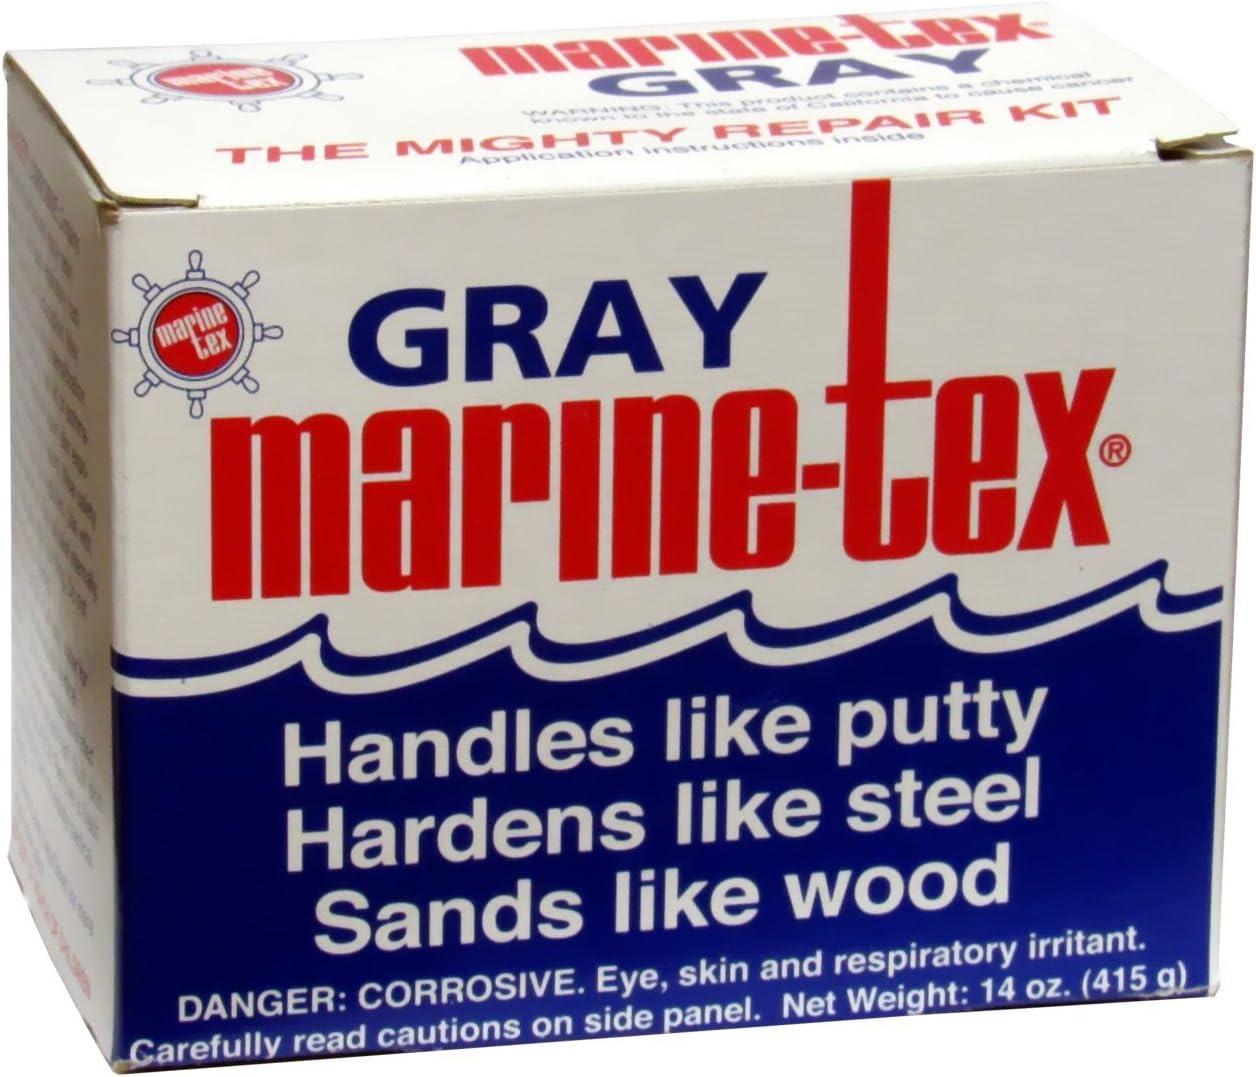 Marine-Tex Epoxy Putty Gray 12 Ounce (3/4 lb) Kit